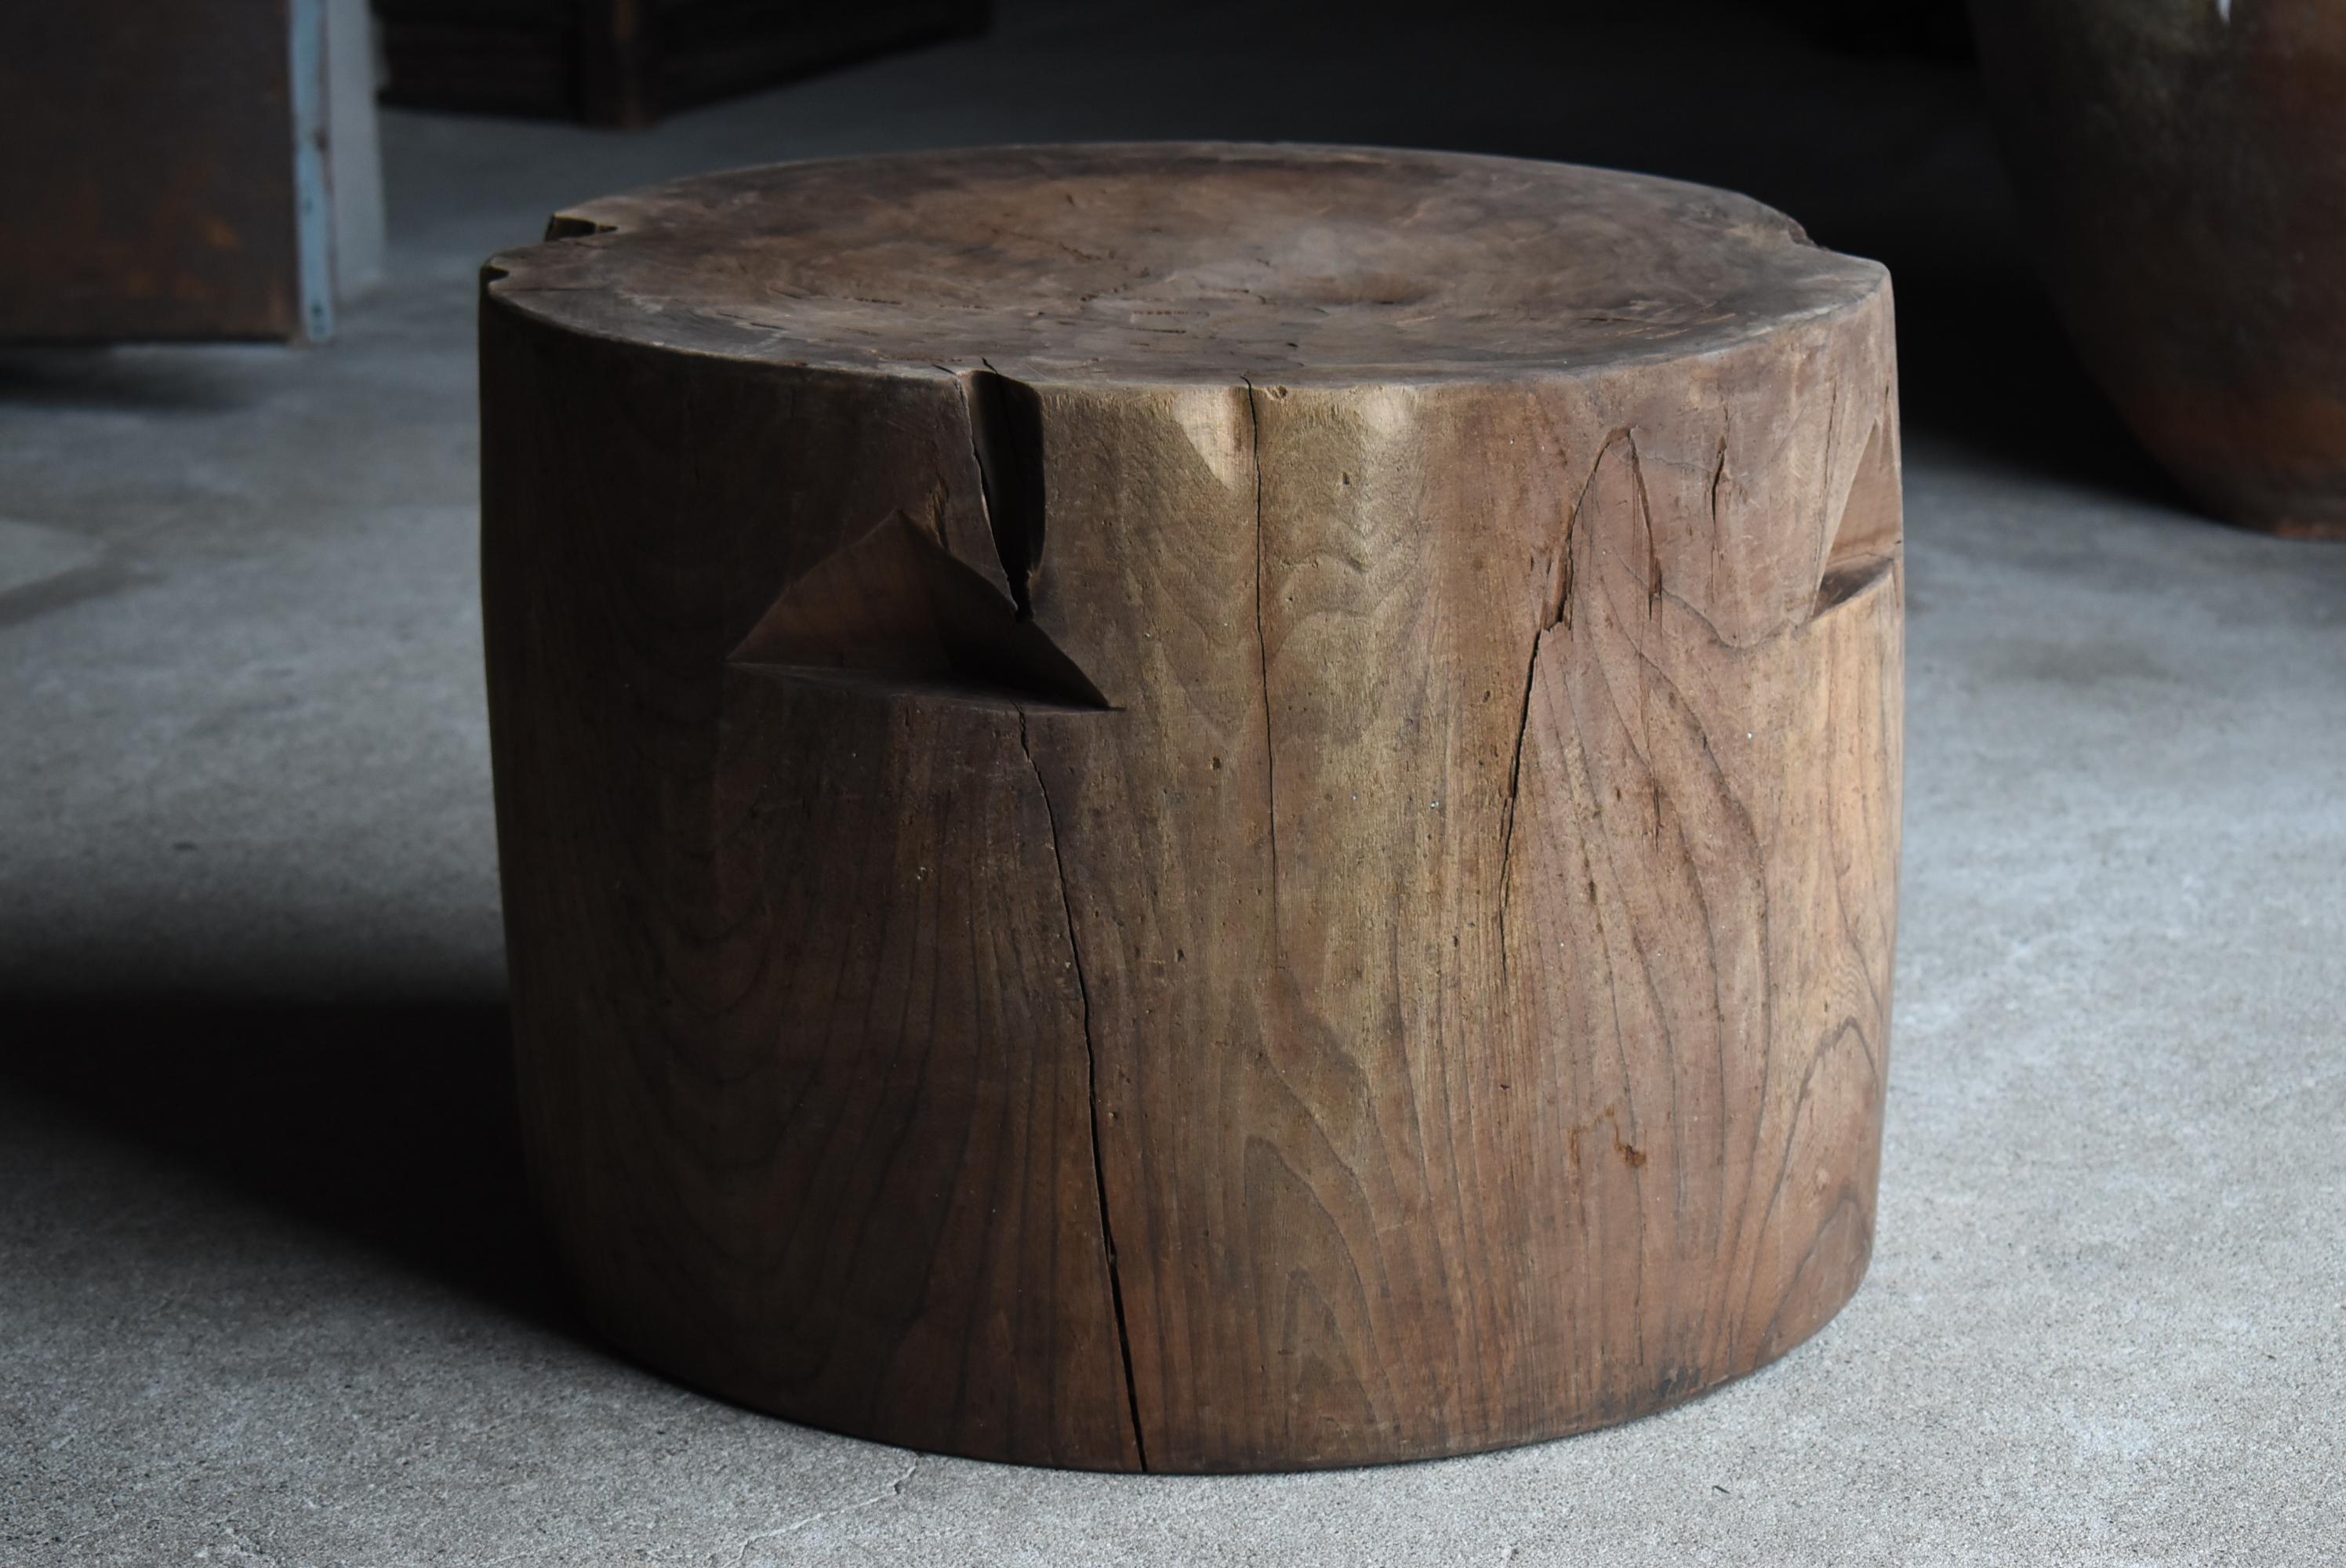 Wood Japanese Antique Coffee Table 1860s-1900s /Primitive Mingei Wabisabi